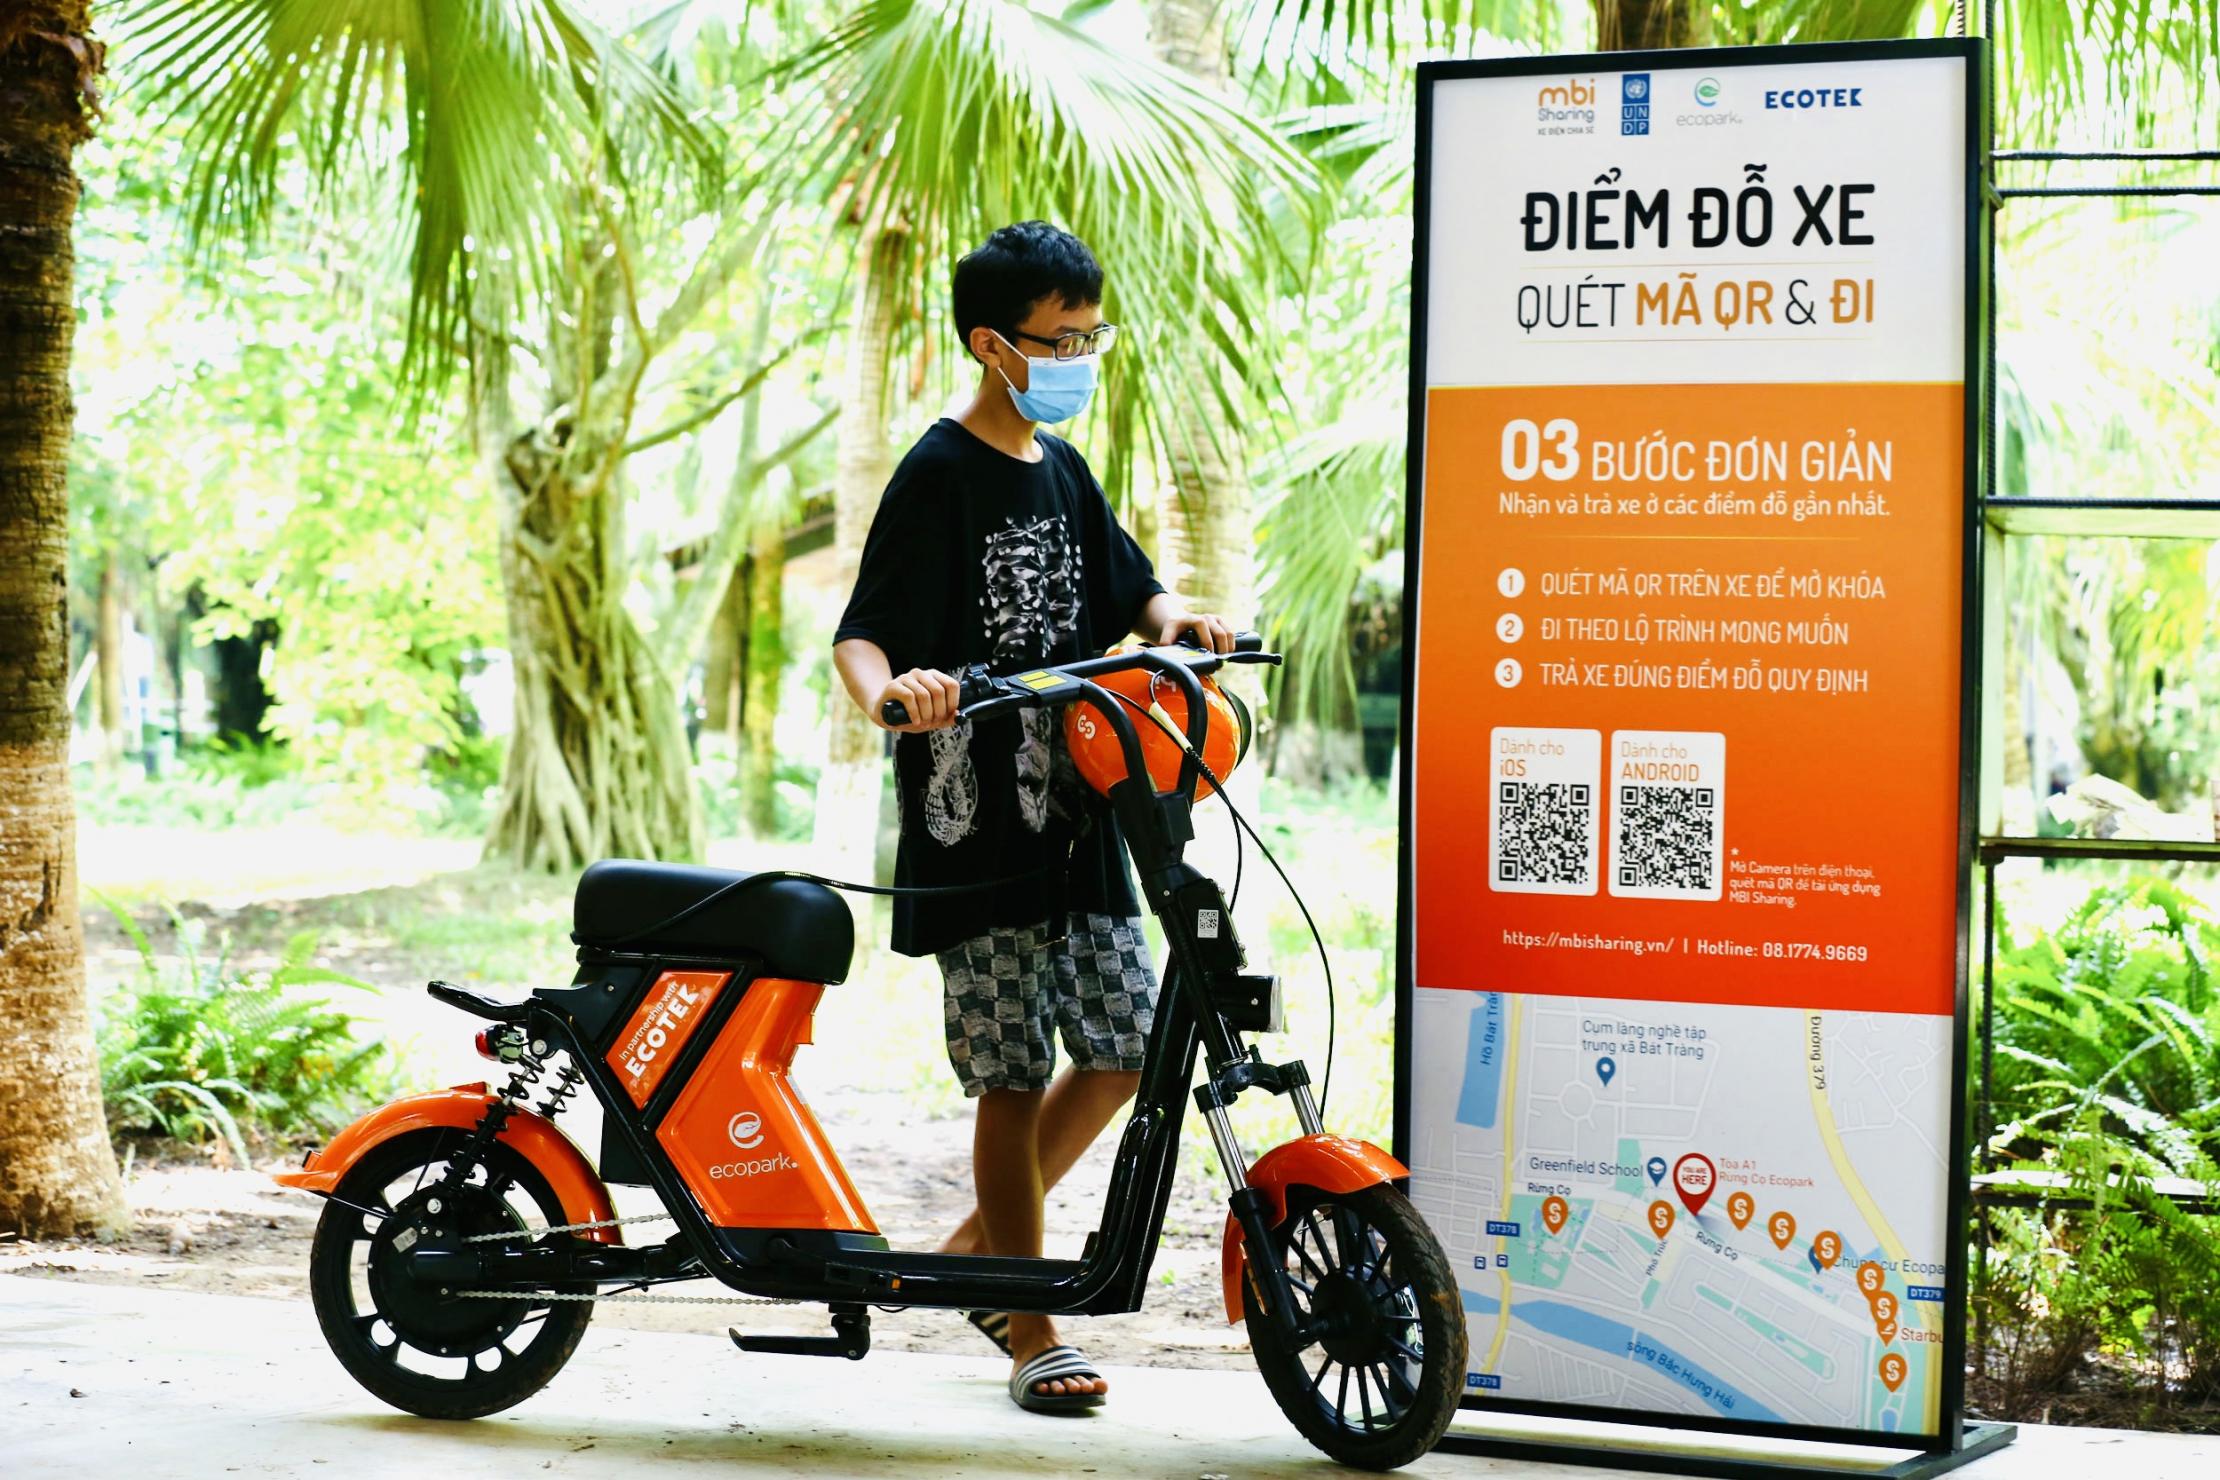 A young man riding an electric bike in Vietnam